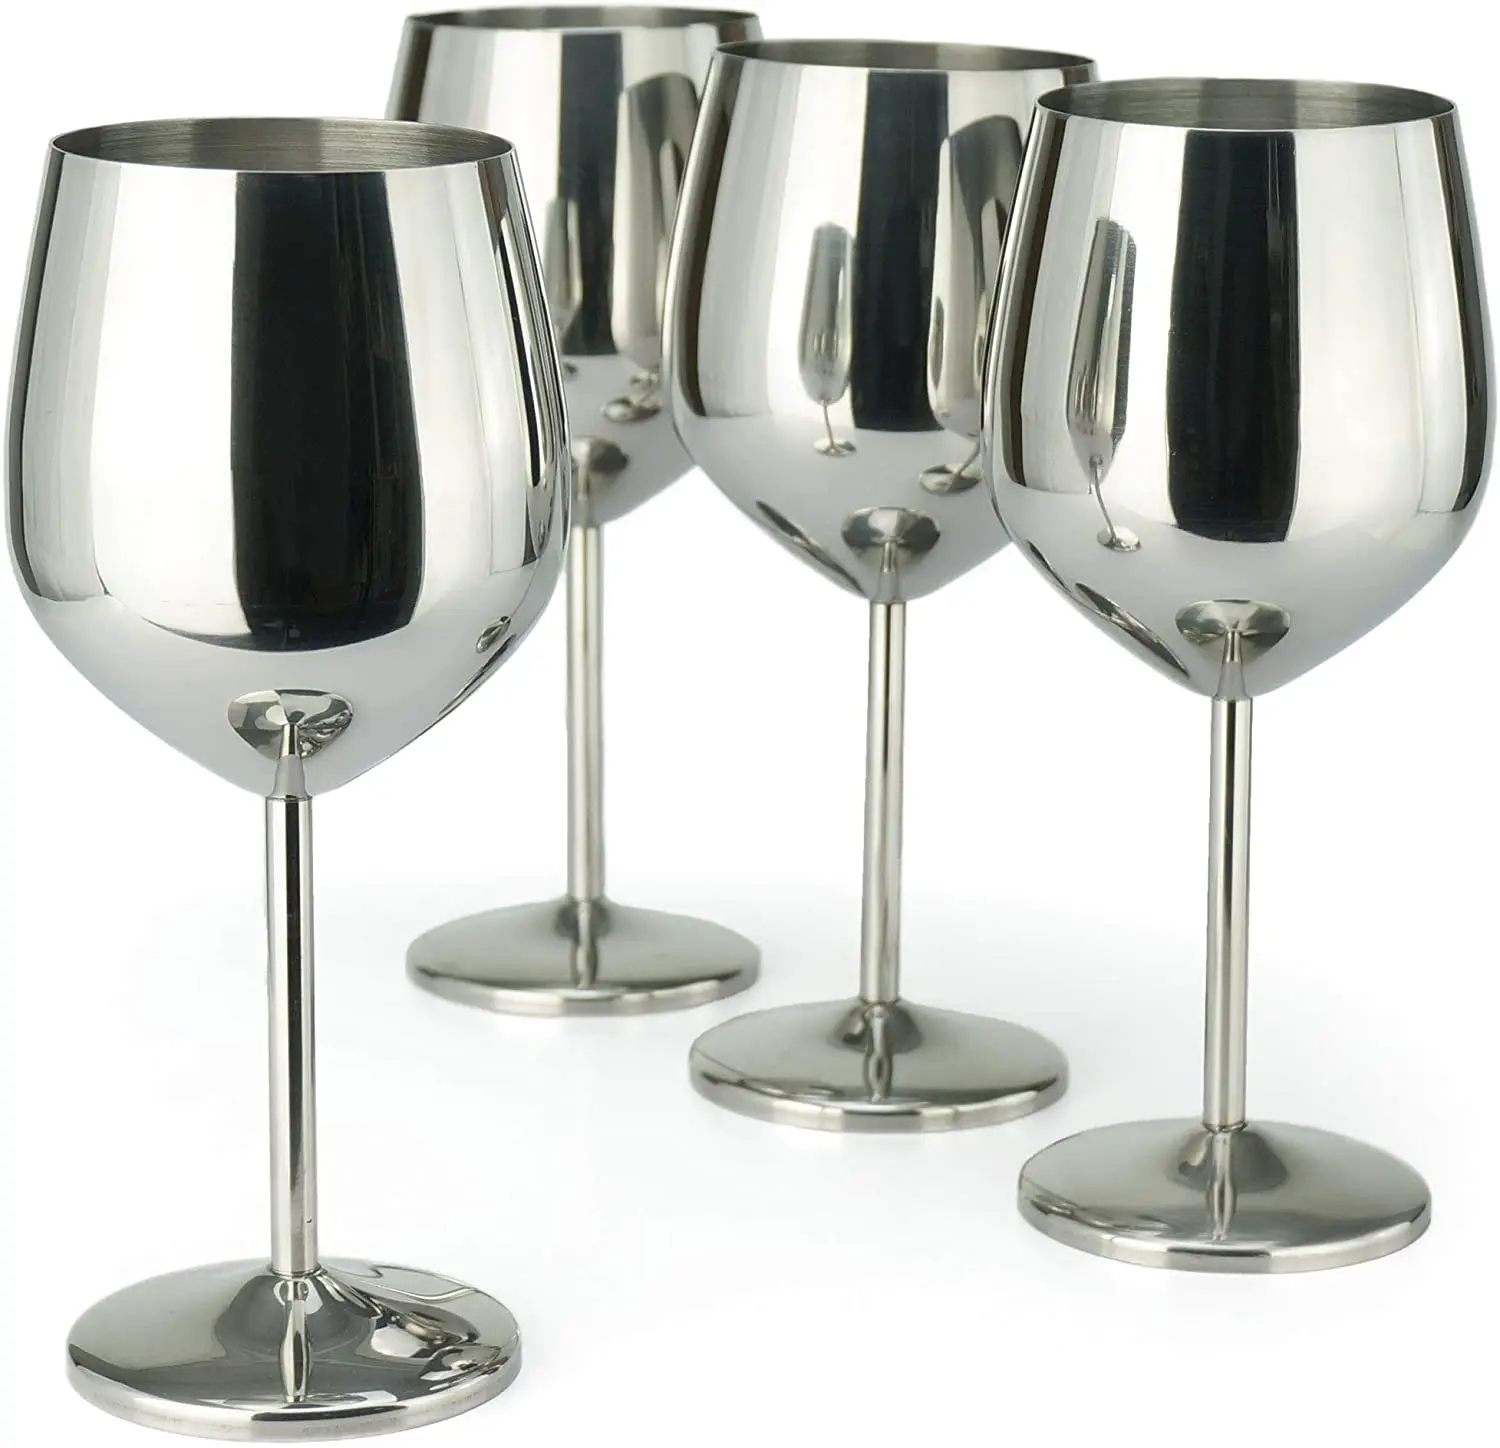 Stainless Steel Single Wine Glass